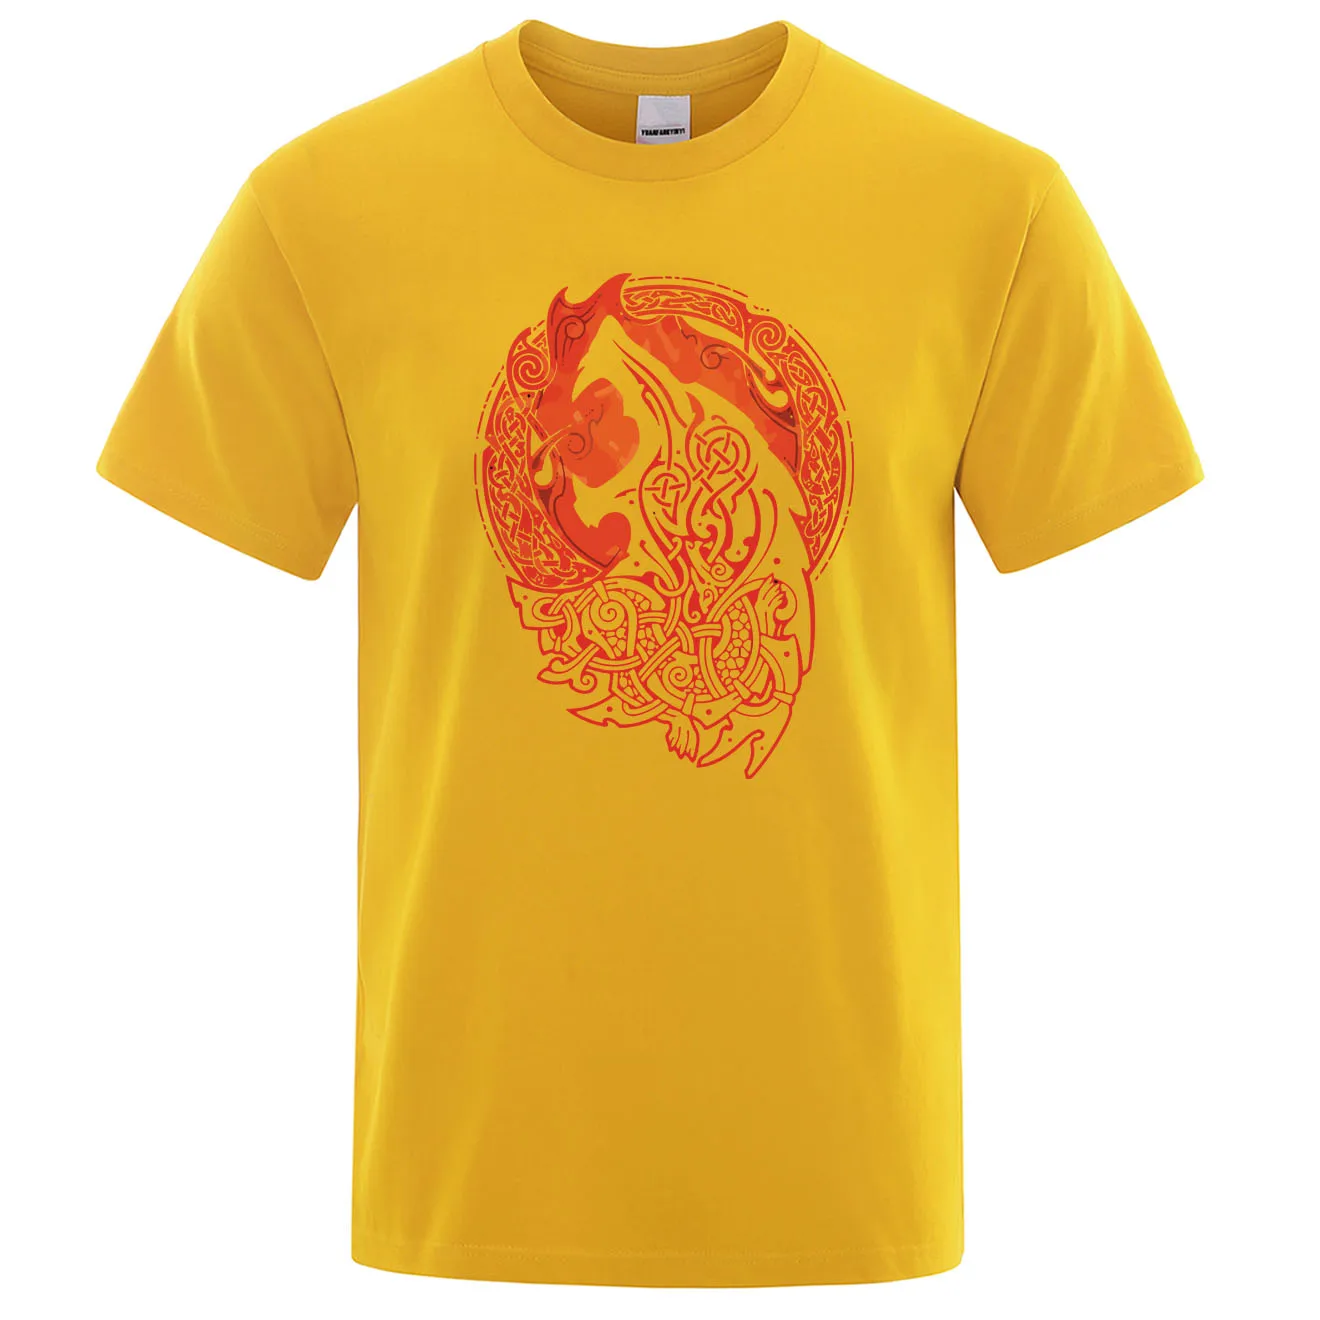 Norse Mythology Vikings Fenrir wolf футболка для мужчин, качественная хлопковая хипстерская футболка, хлопок, топы для отдыха, футболка с викингом - Цвет: yellow 6